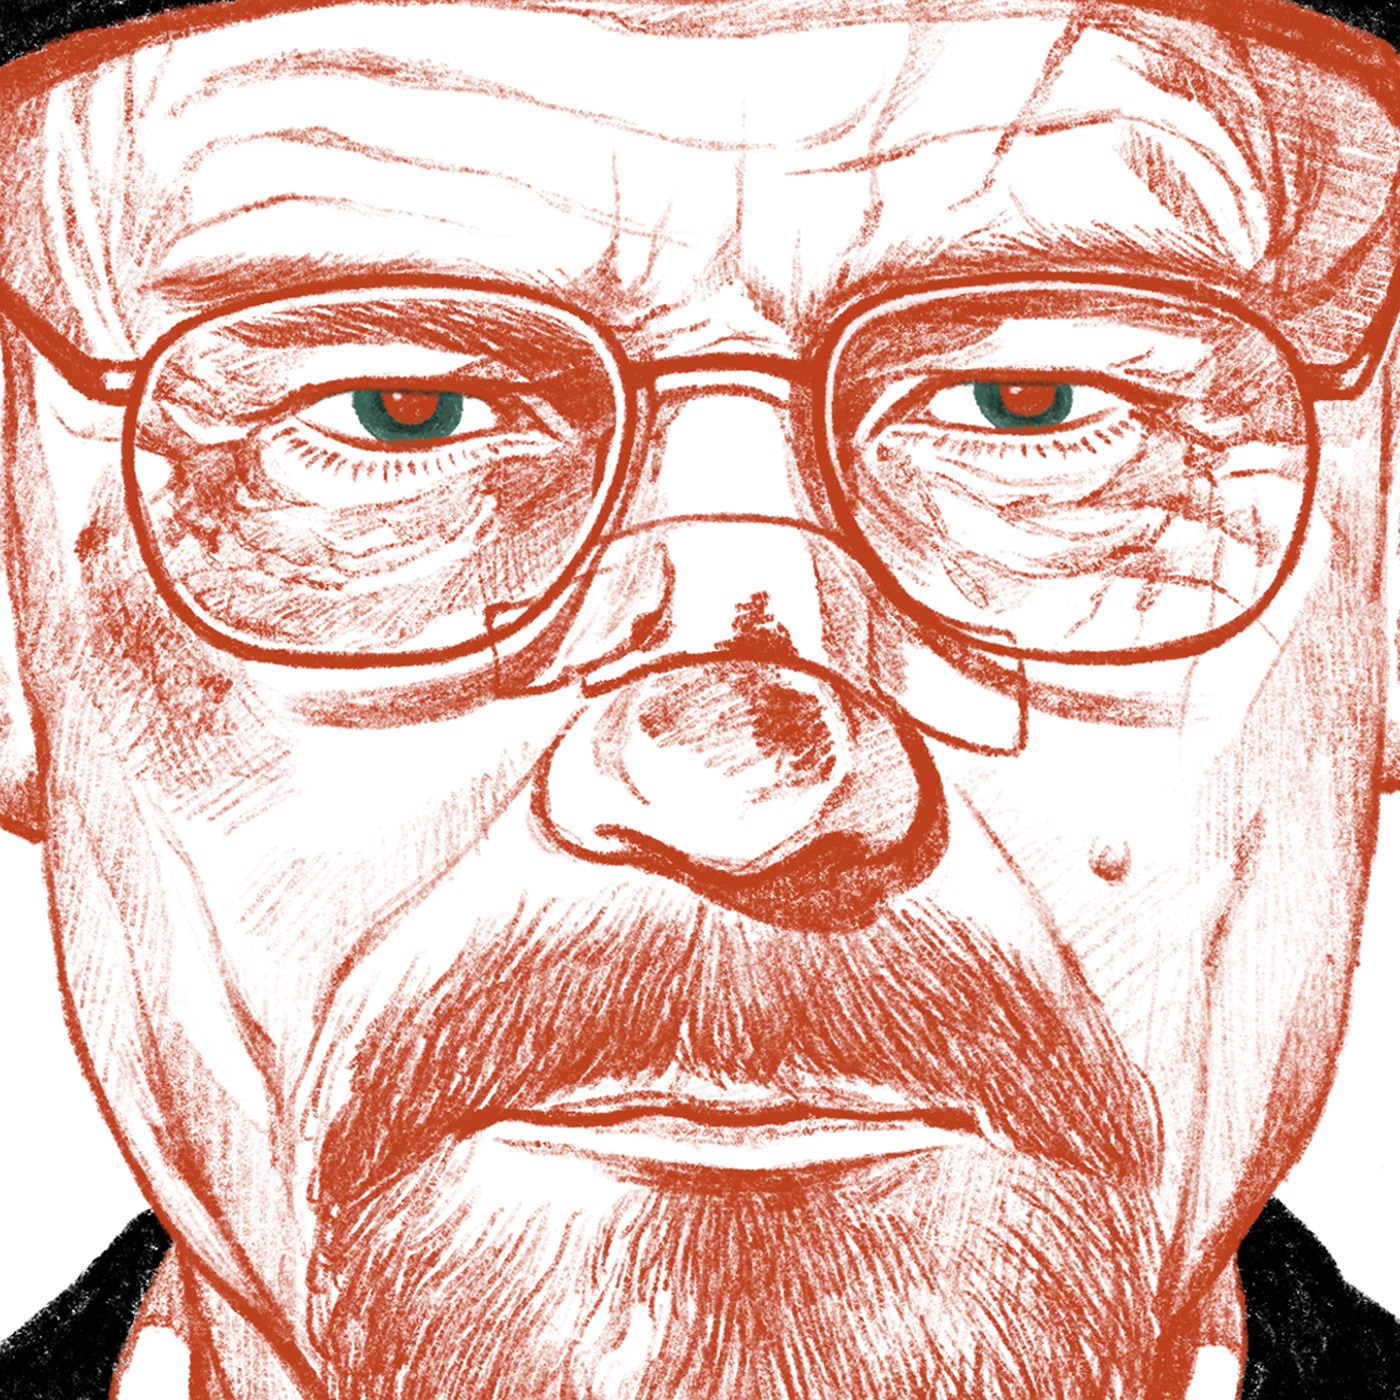 breaking bad bryan cranston caricature   Drawing  iPad portrait